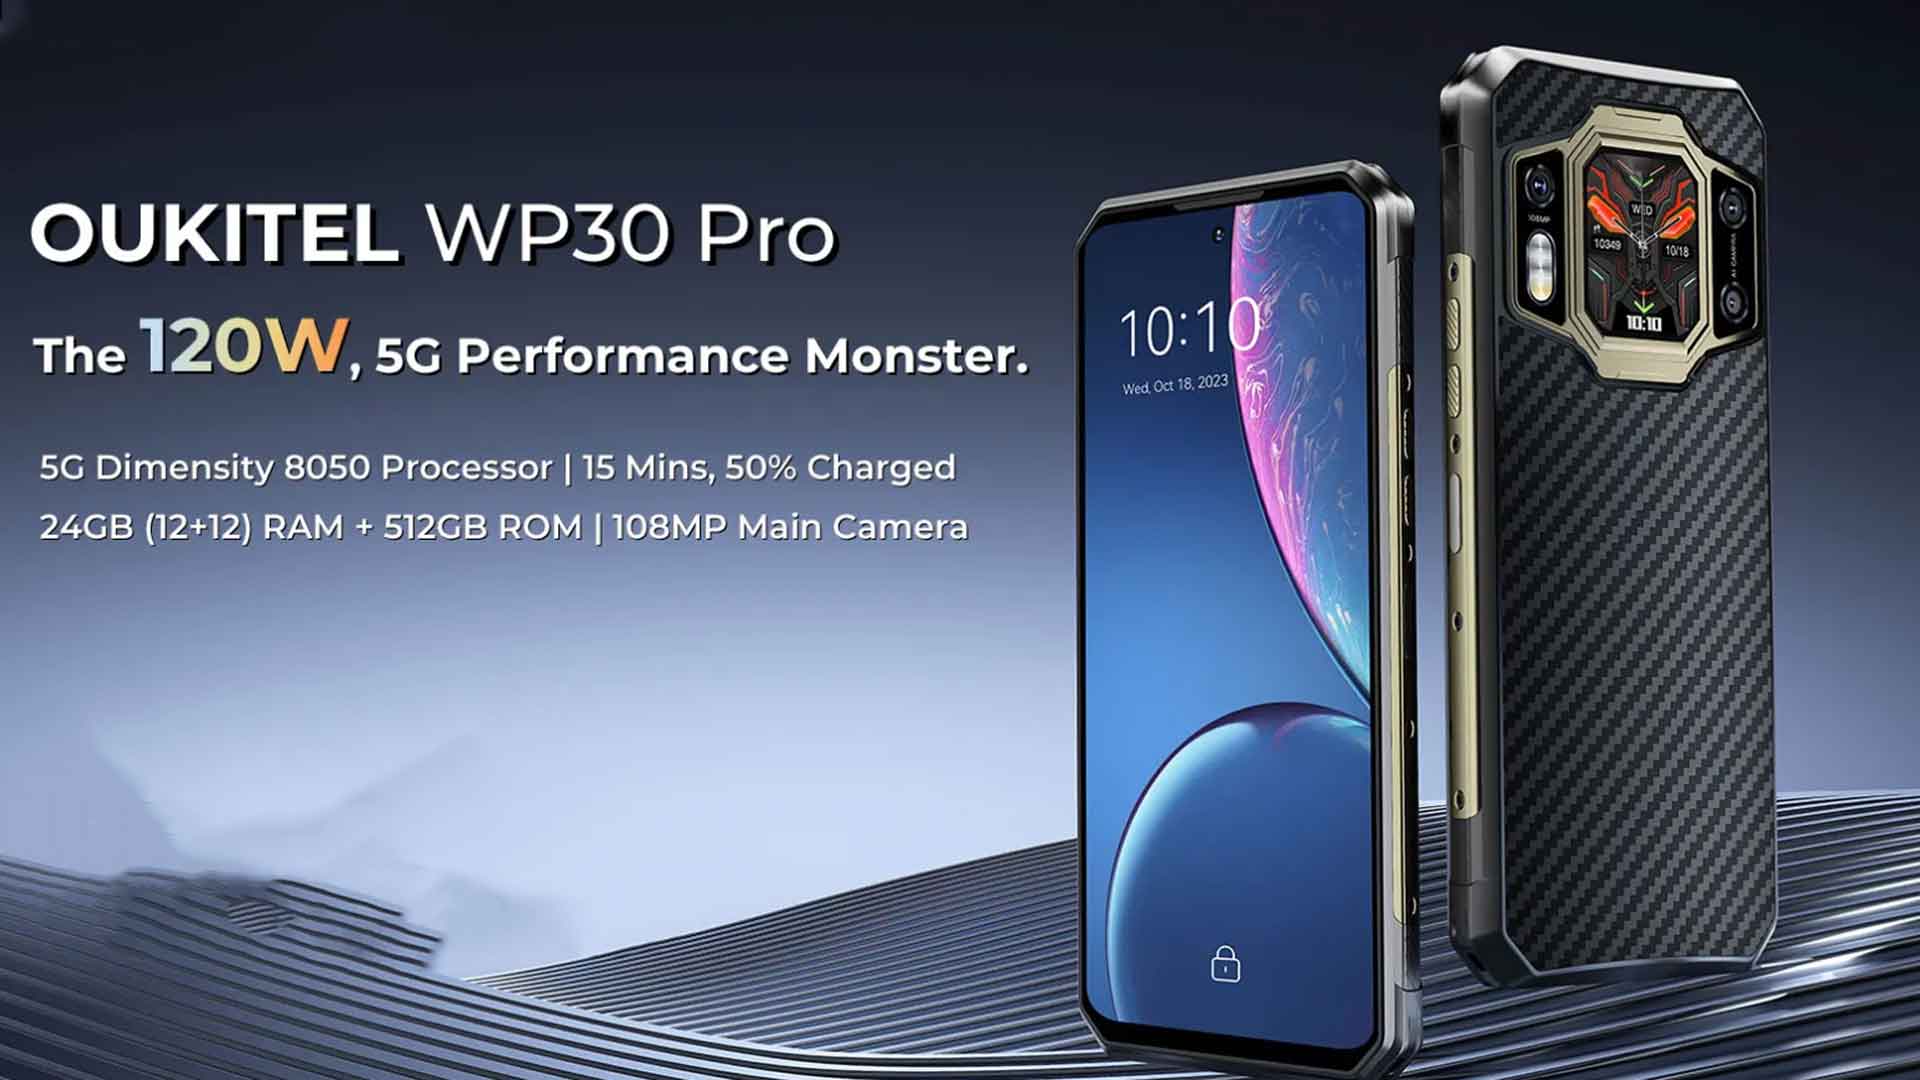 Oukitel WP30 Pro, Oukitel WP30 Pro review, Oukitel WP30 Pro specs, Oukitel WP30 Pro price, Oukitel WP30 Pro features, Oukitel WP30 Pro phone, rugged phone, best rugged phone